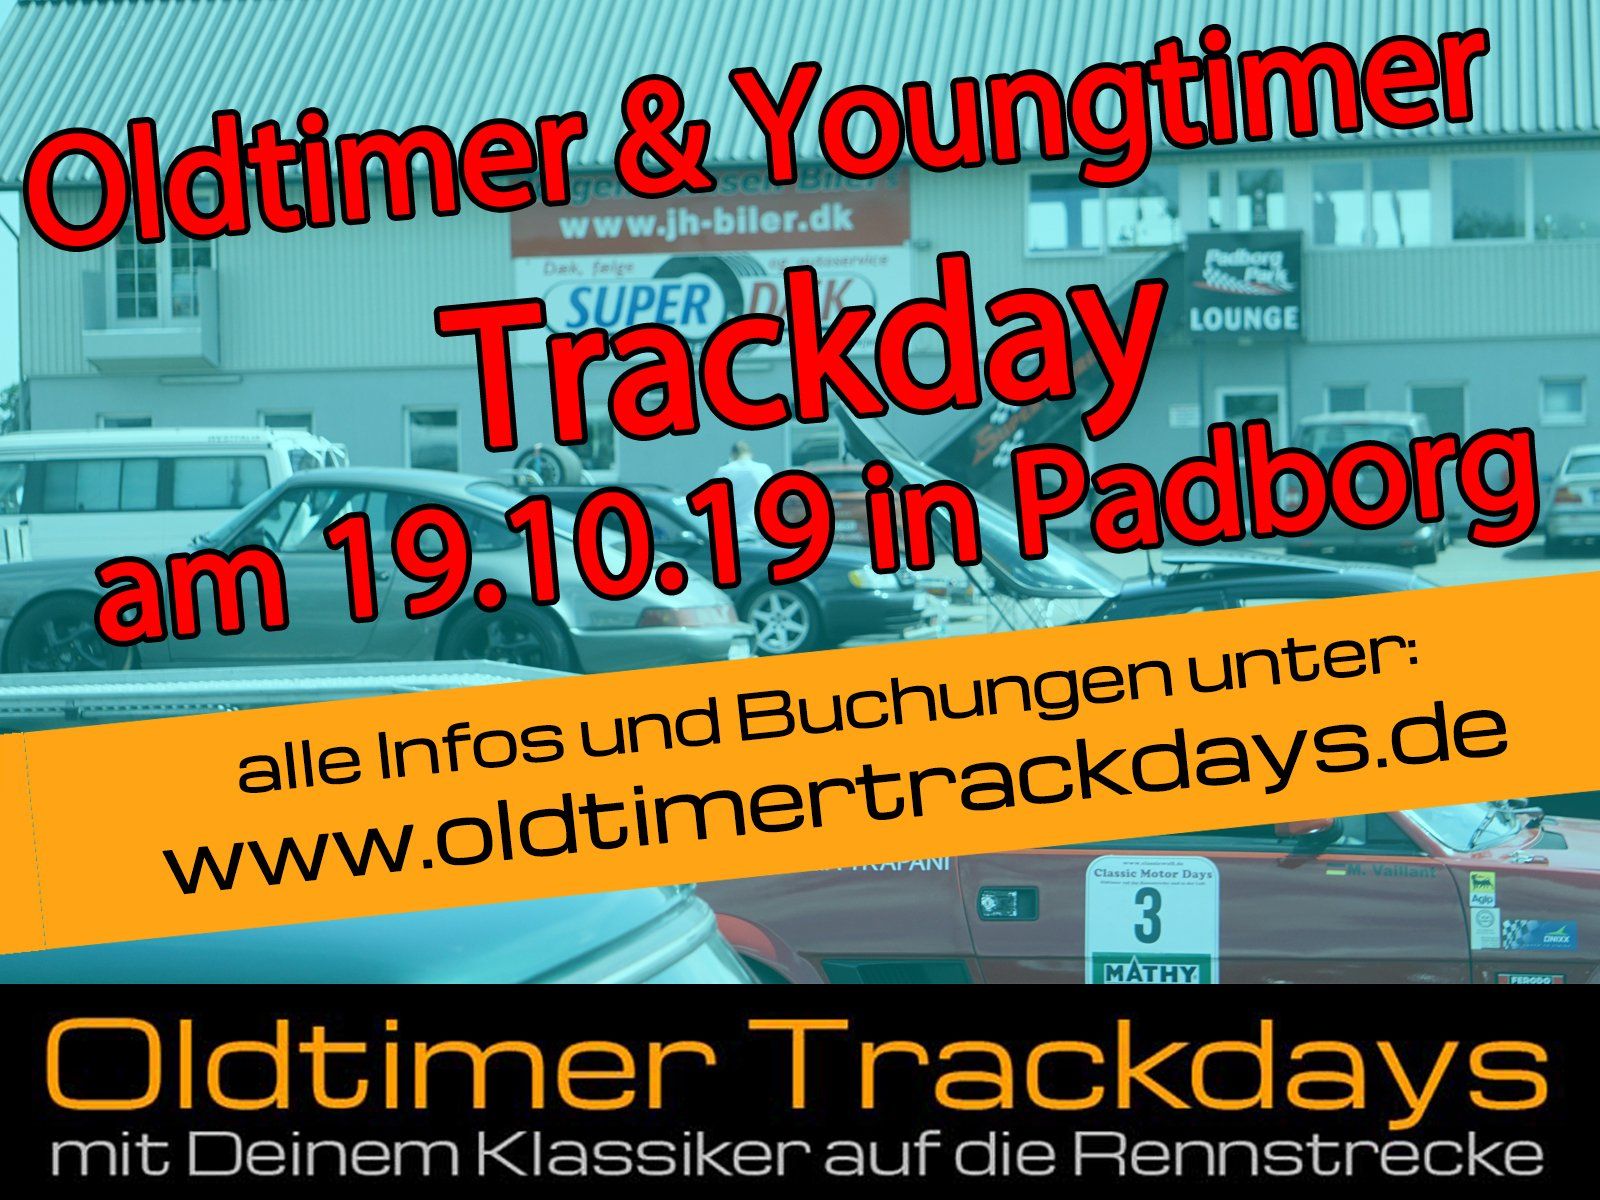 Padborg Trackday 19.10.19